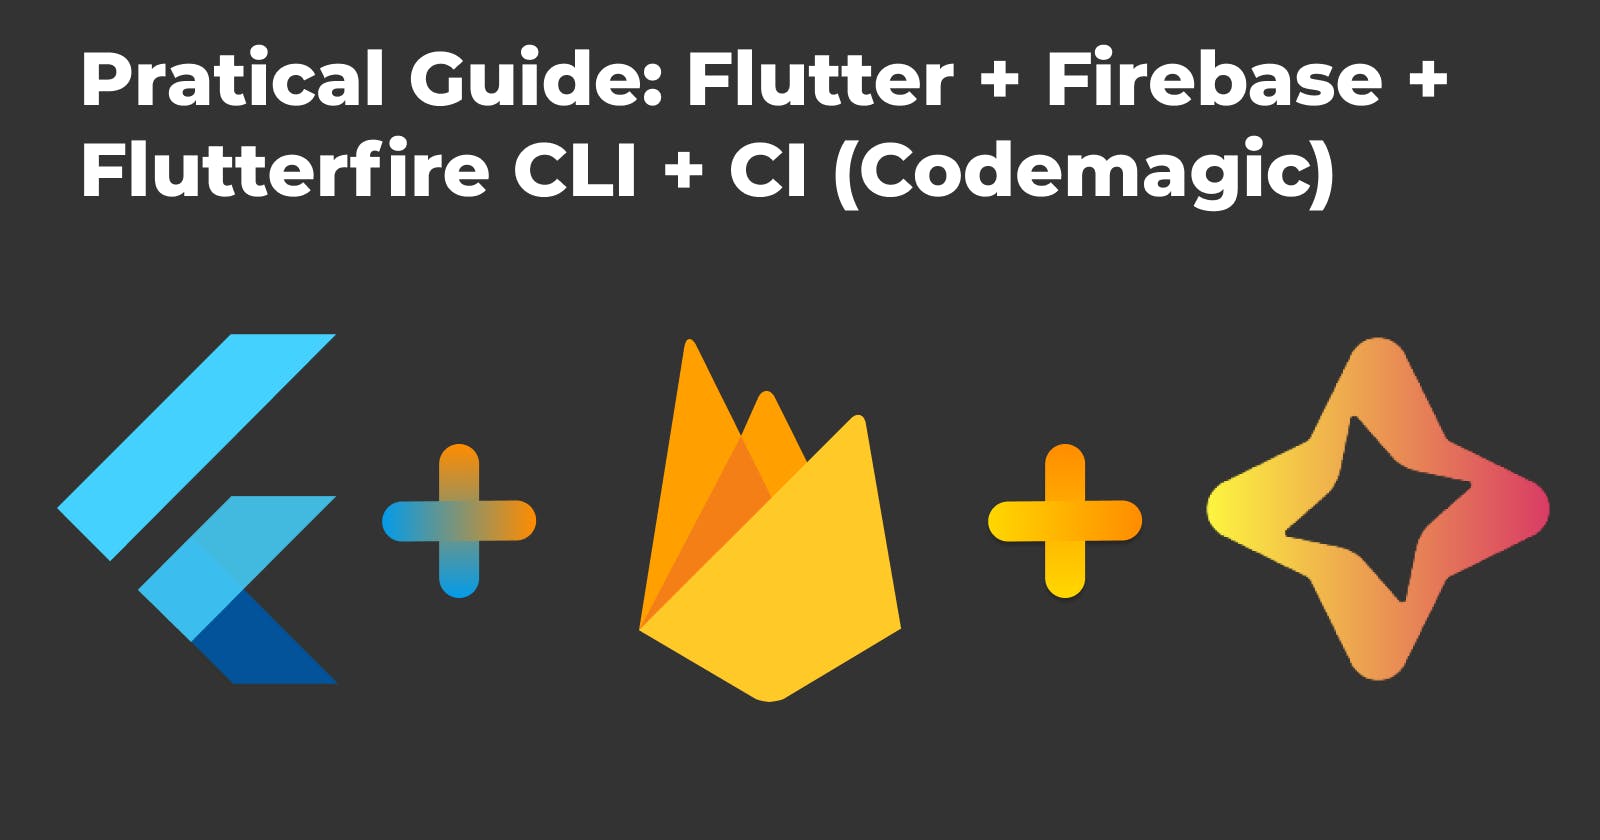 Pratical Guide: Flutter + Firebase + Flutterfire CLI + CI (Codemagic)